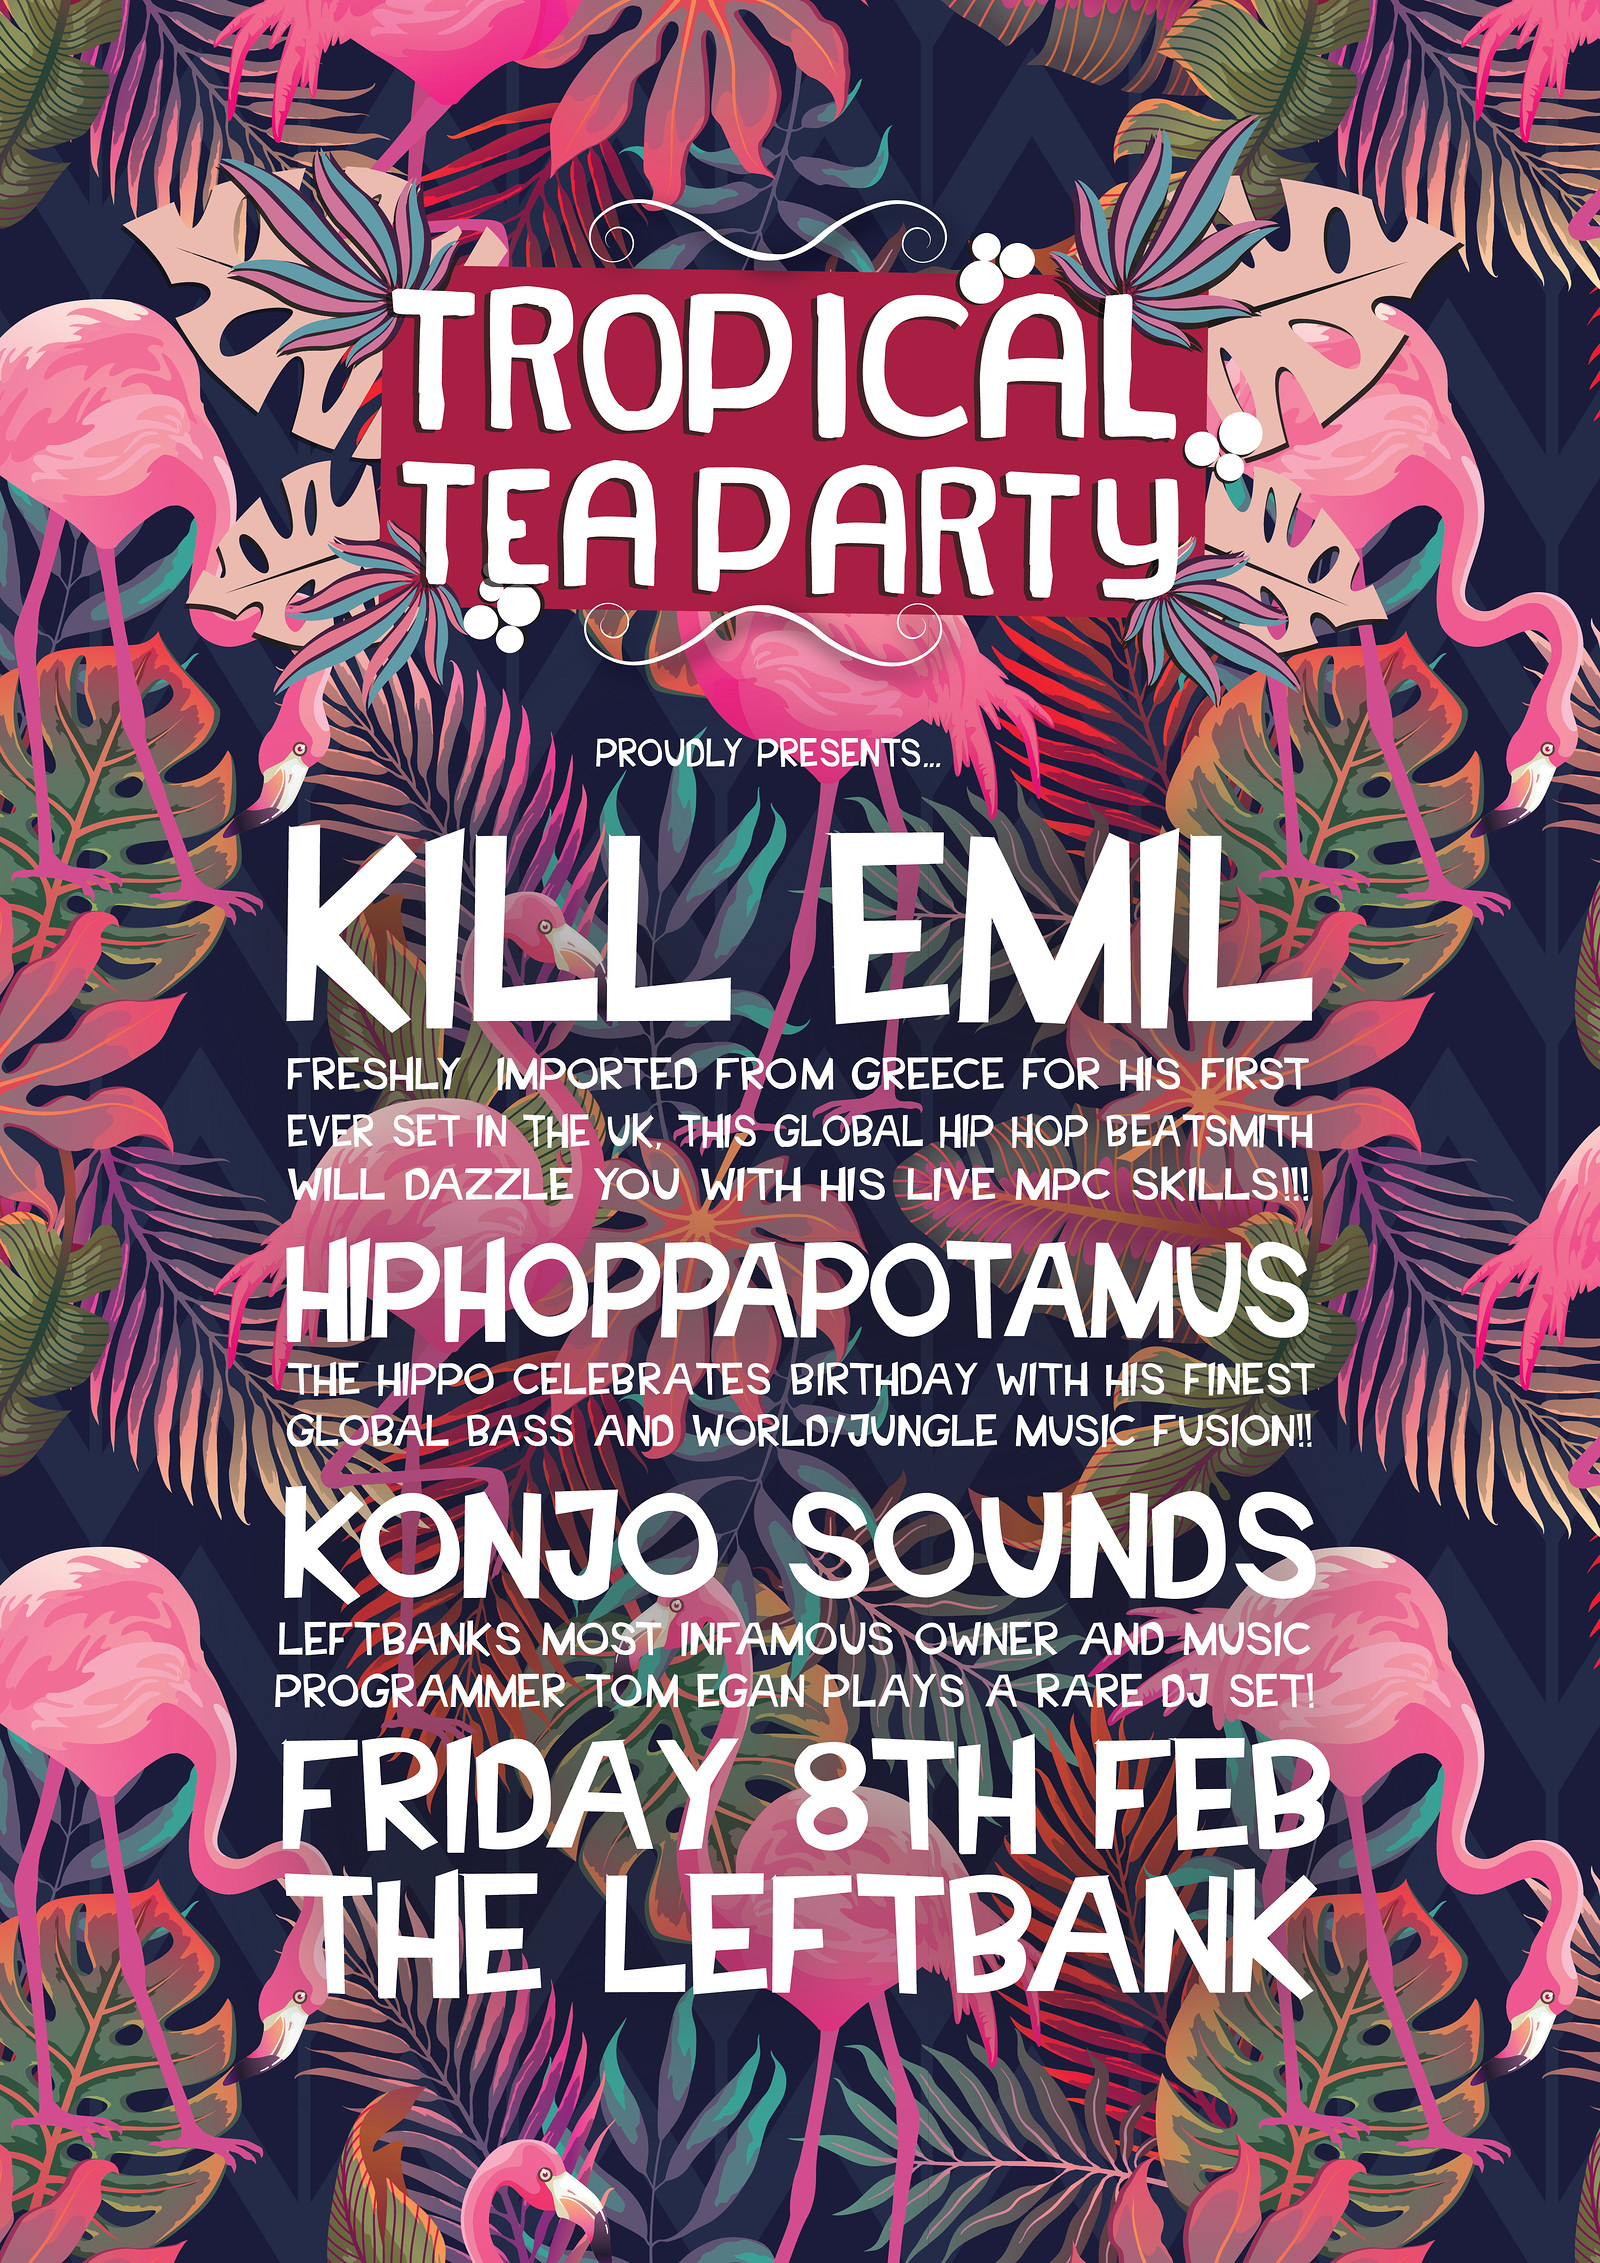 Tropical Tea Party Ft Kill Emil, Hiphoppapotamus. at LEFTBANK